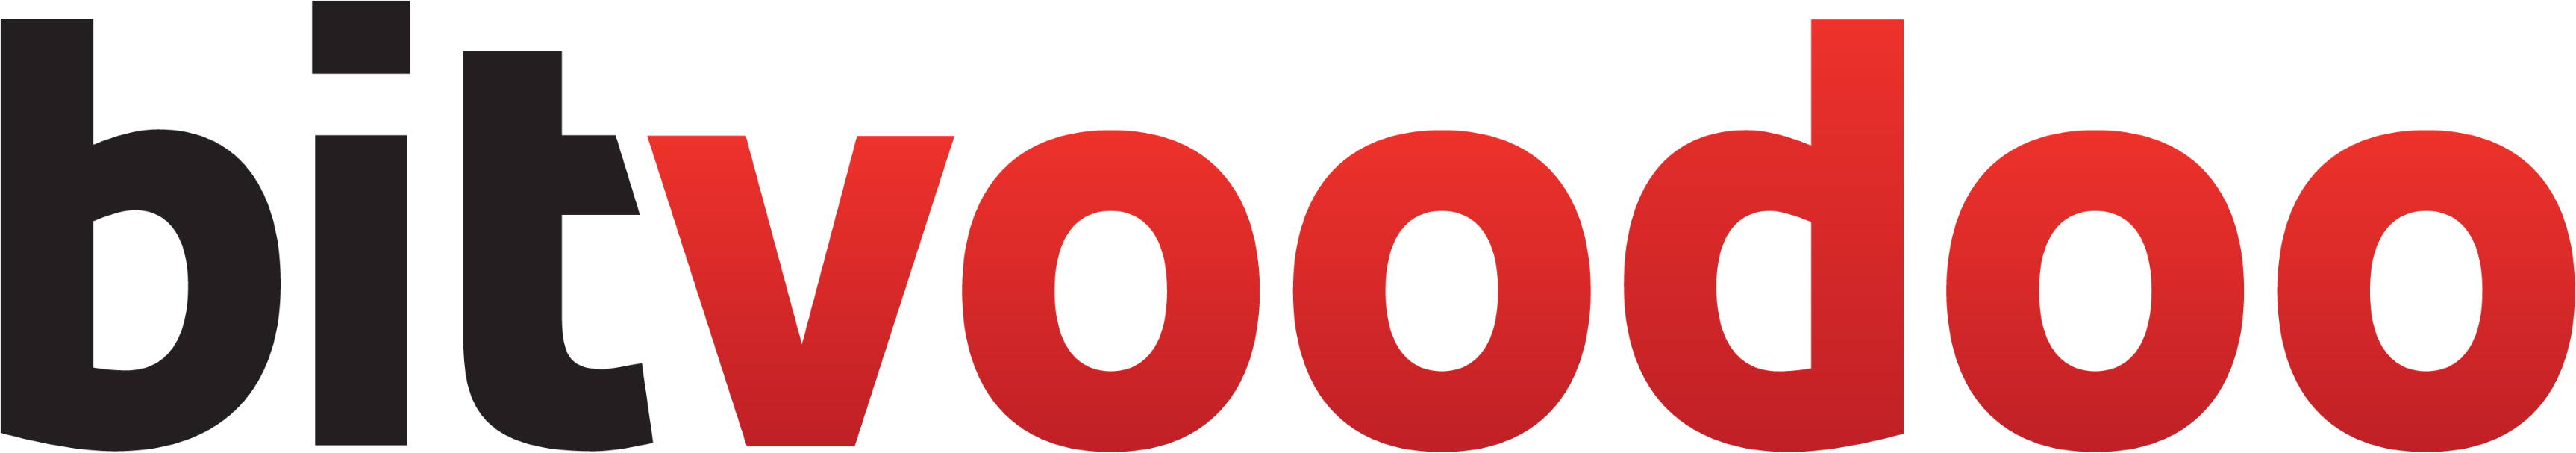 bitvoodoo logo